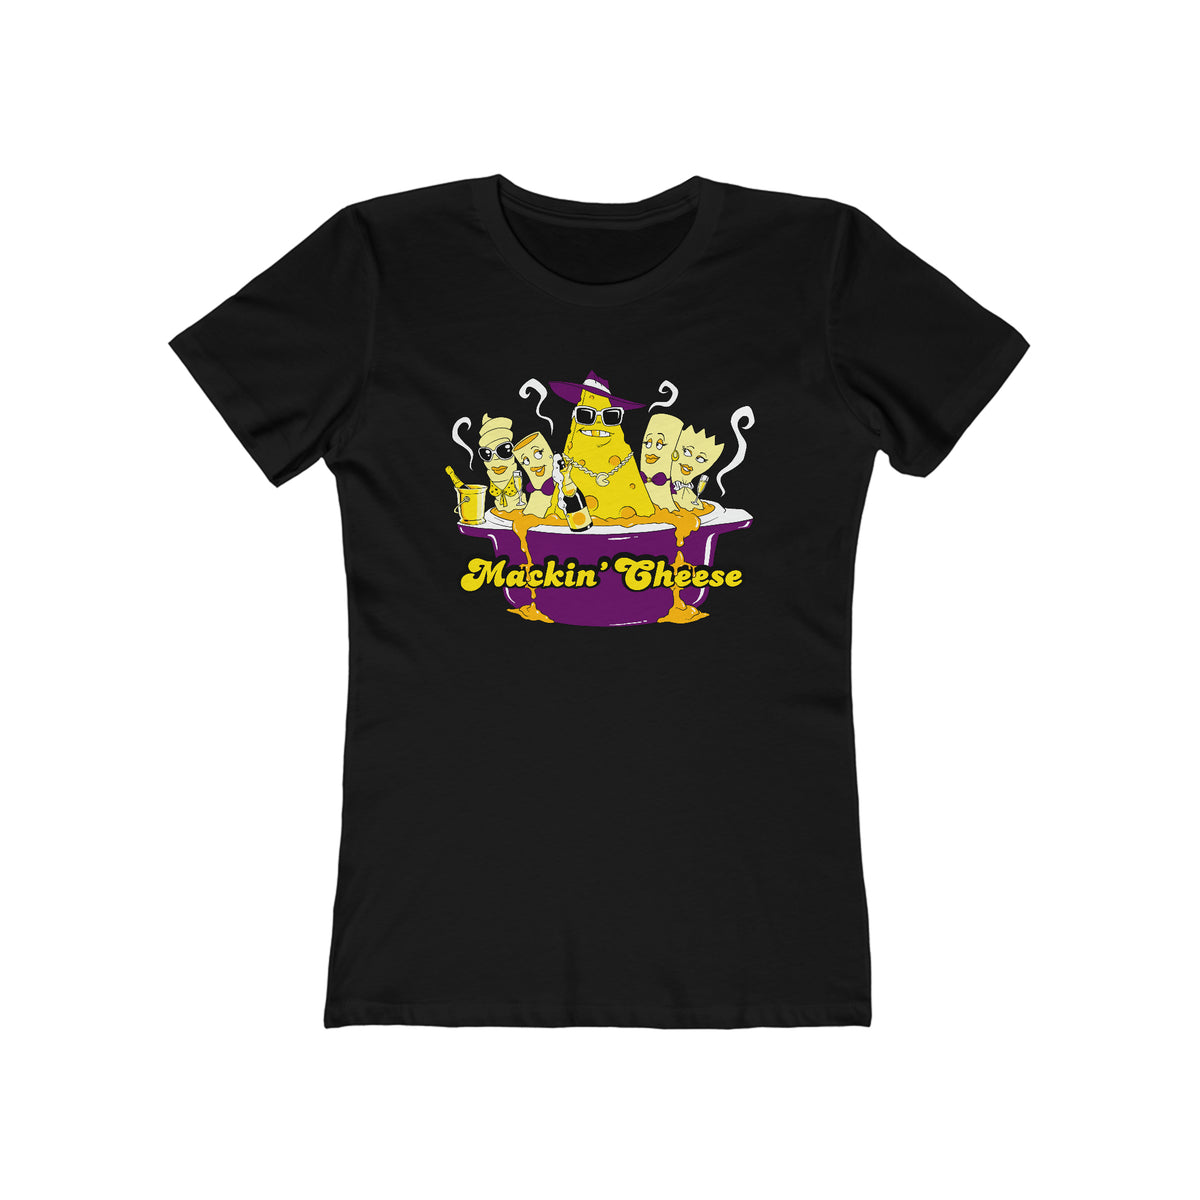 Mackin' Cheese - Women’s T-Shirt